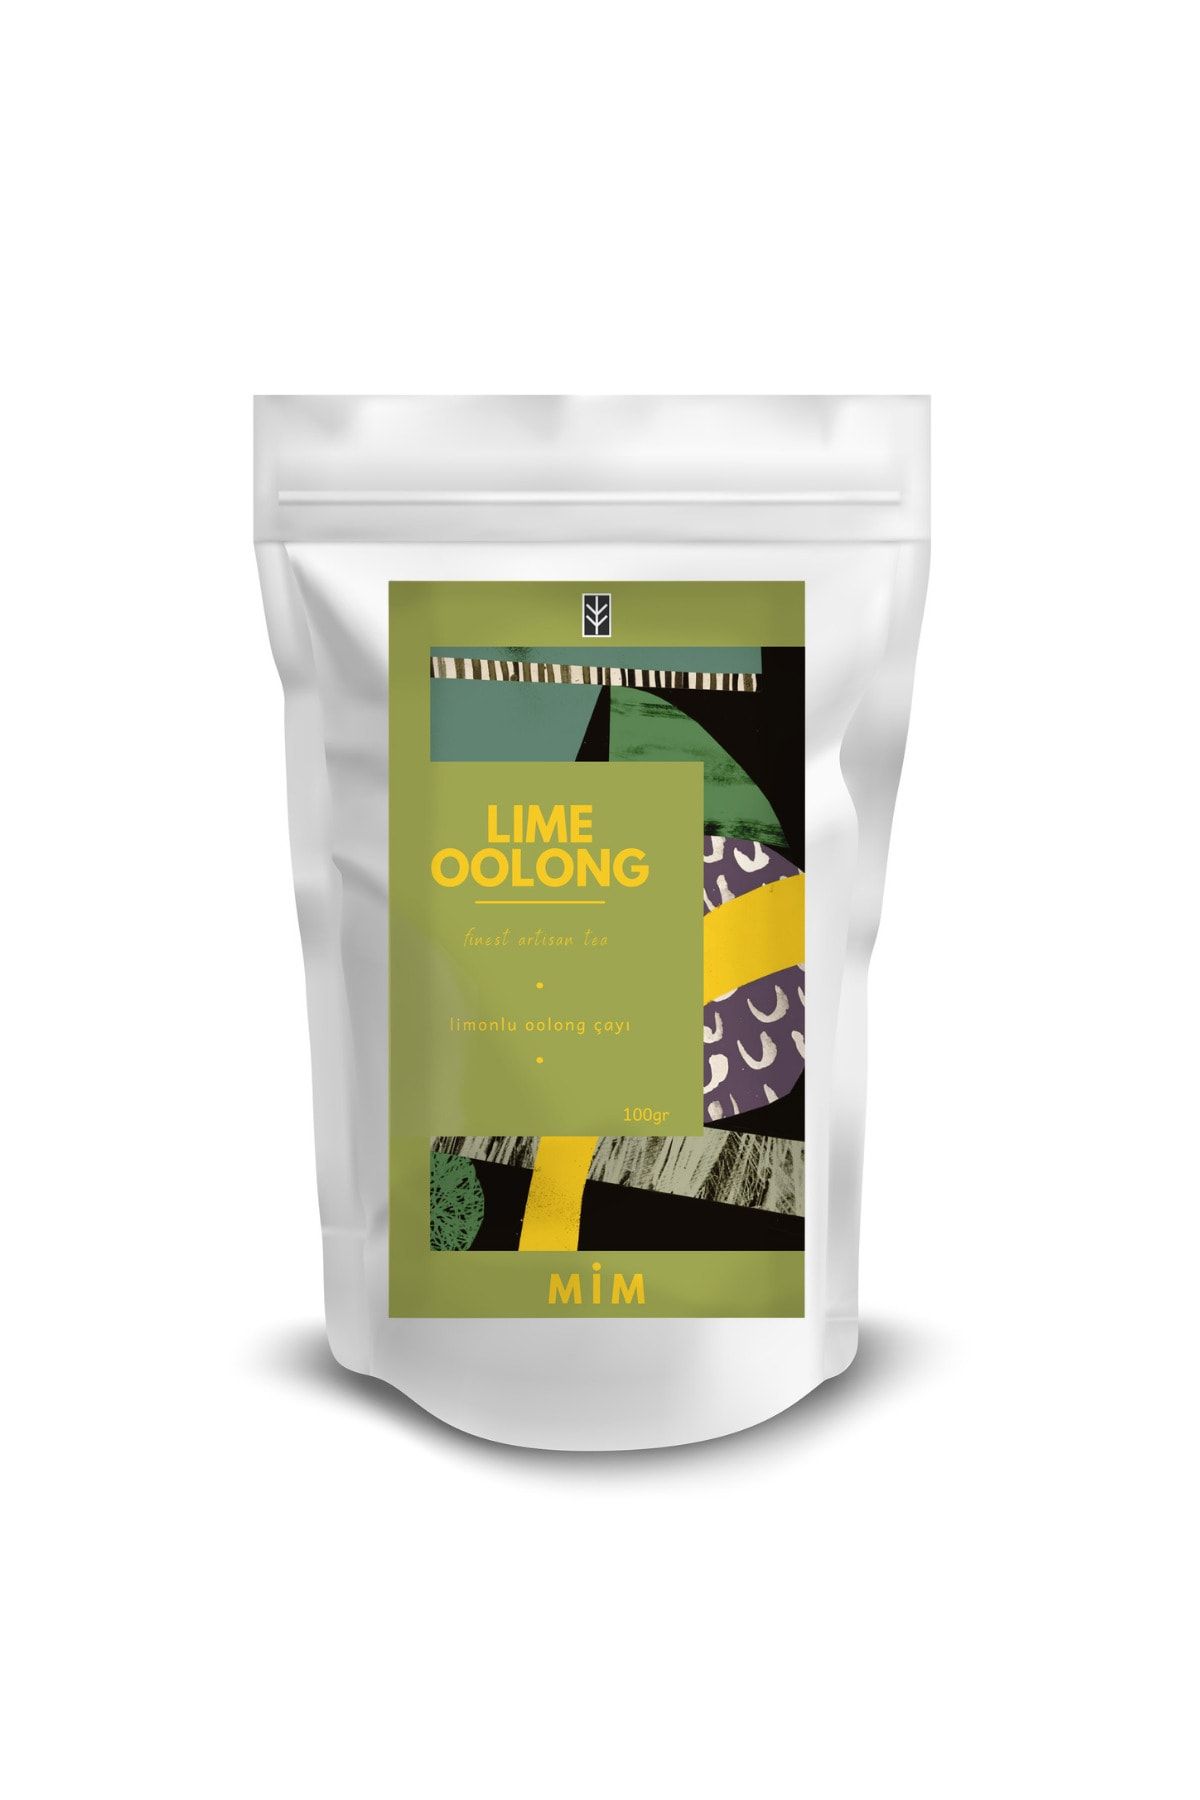 Mim and More Lime Oolong Tea - Limonlu Oolong Çayı 250gr